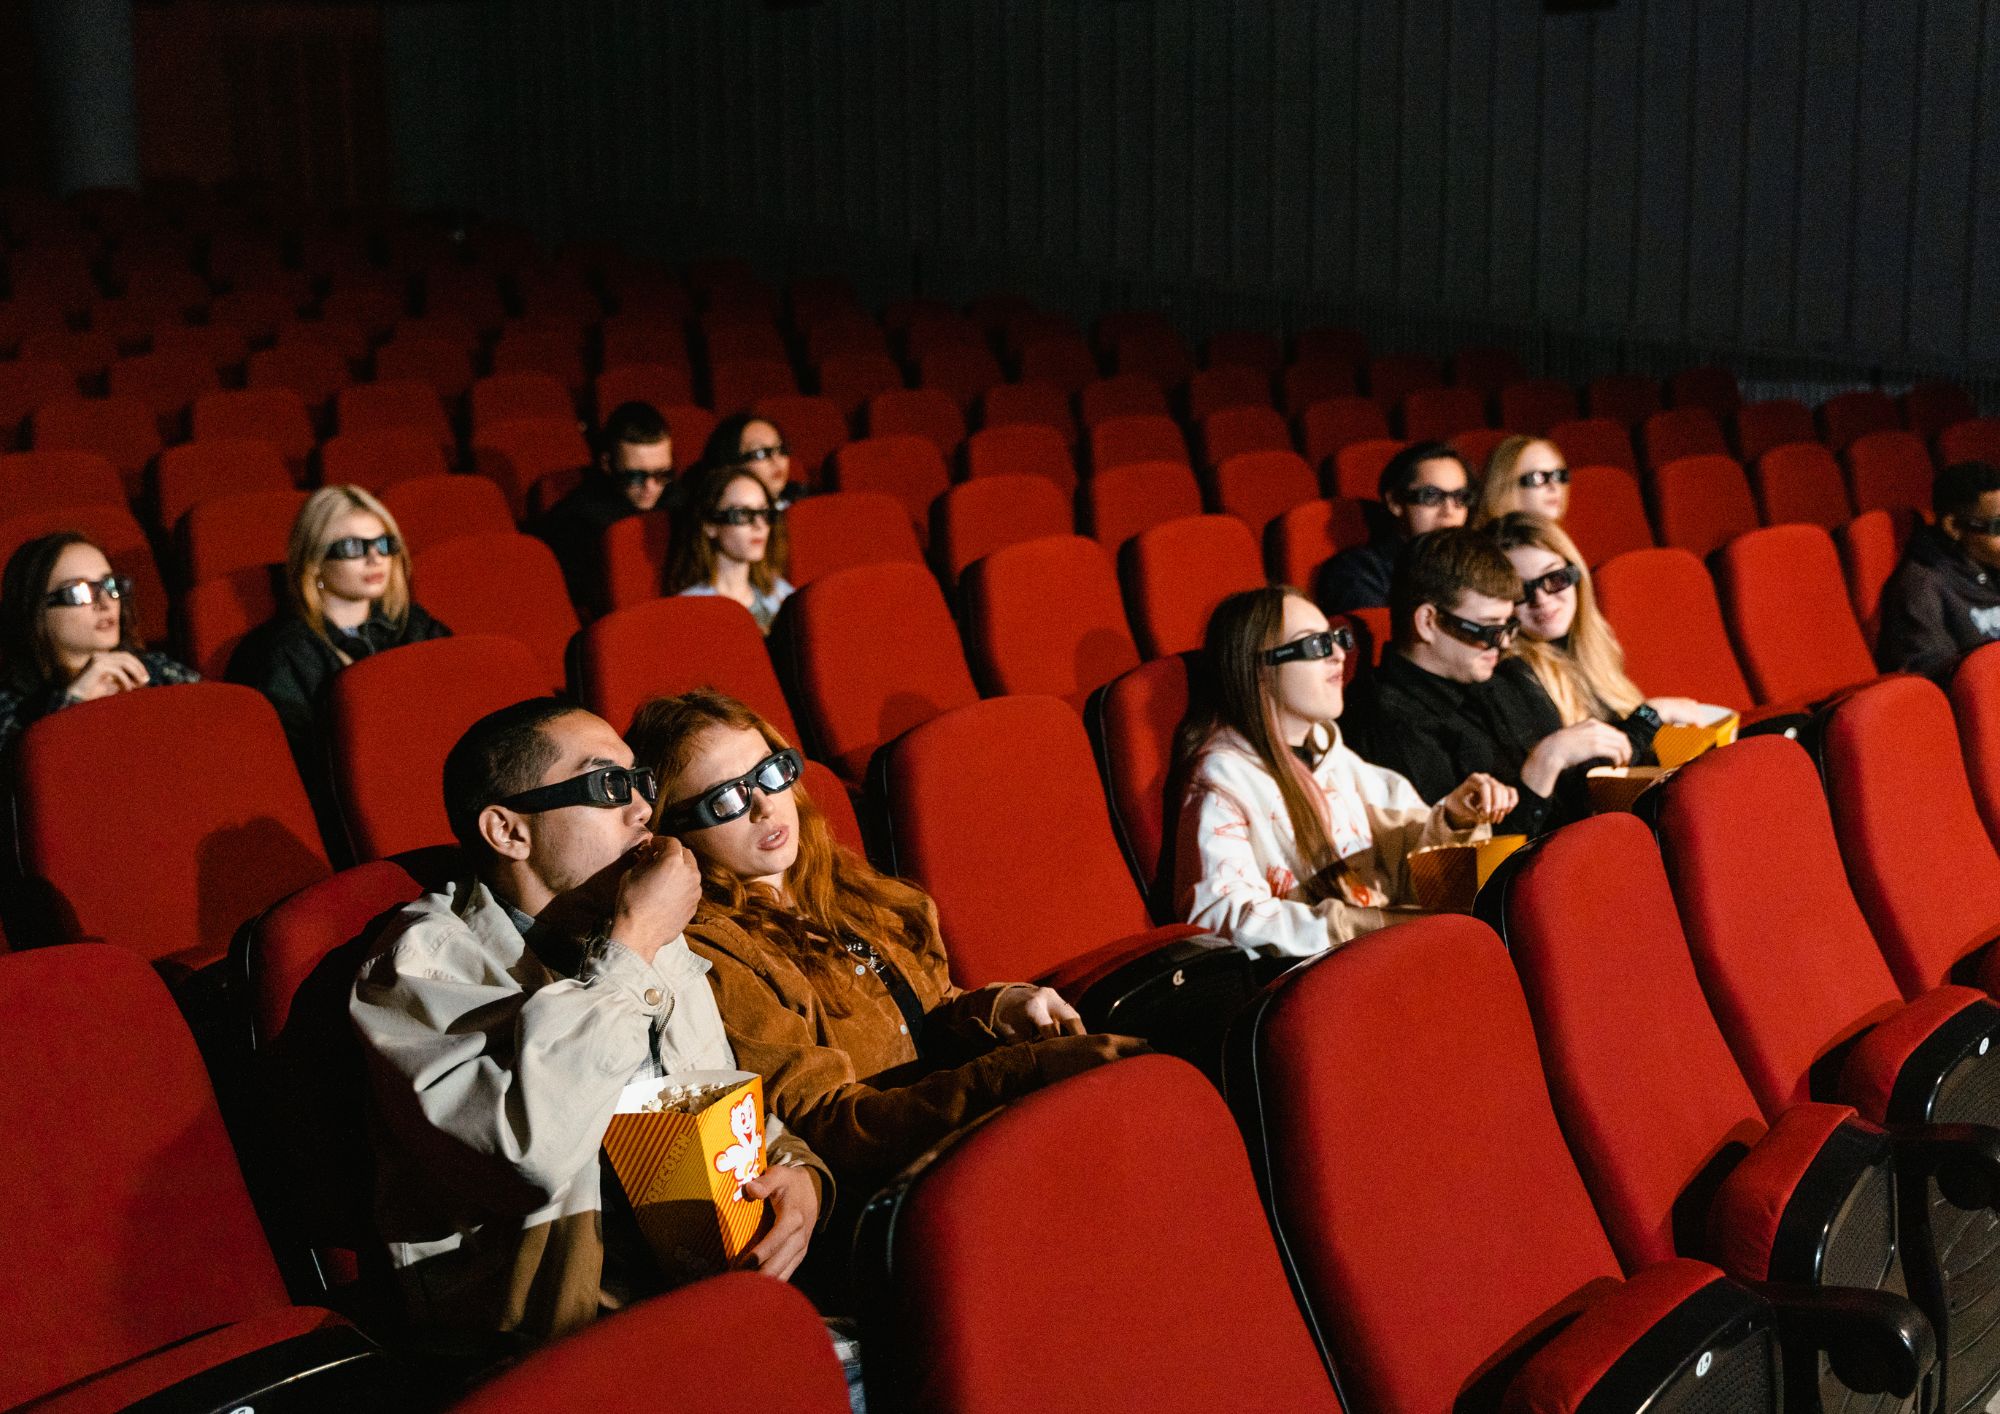 Cinema goers watching a movie